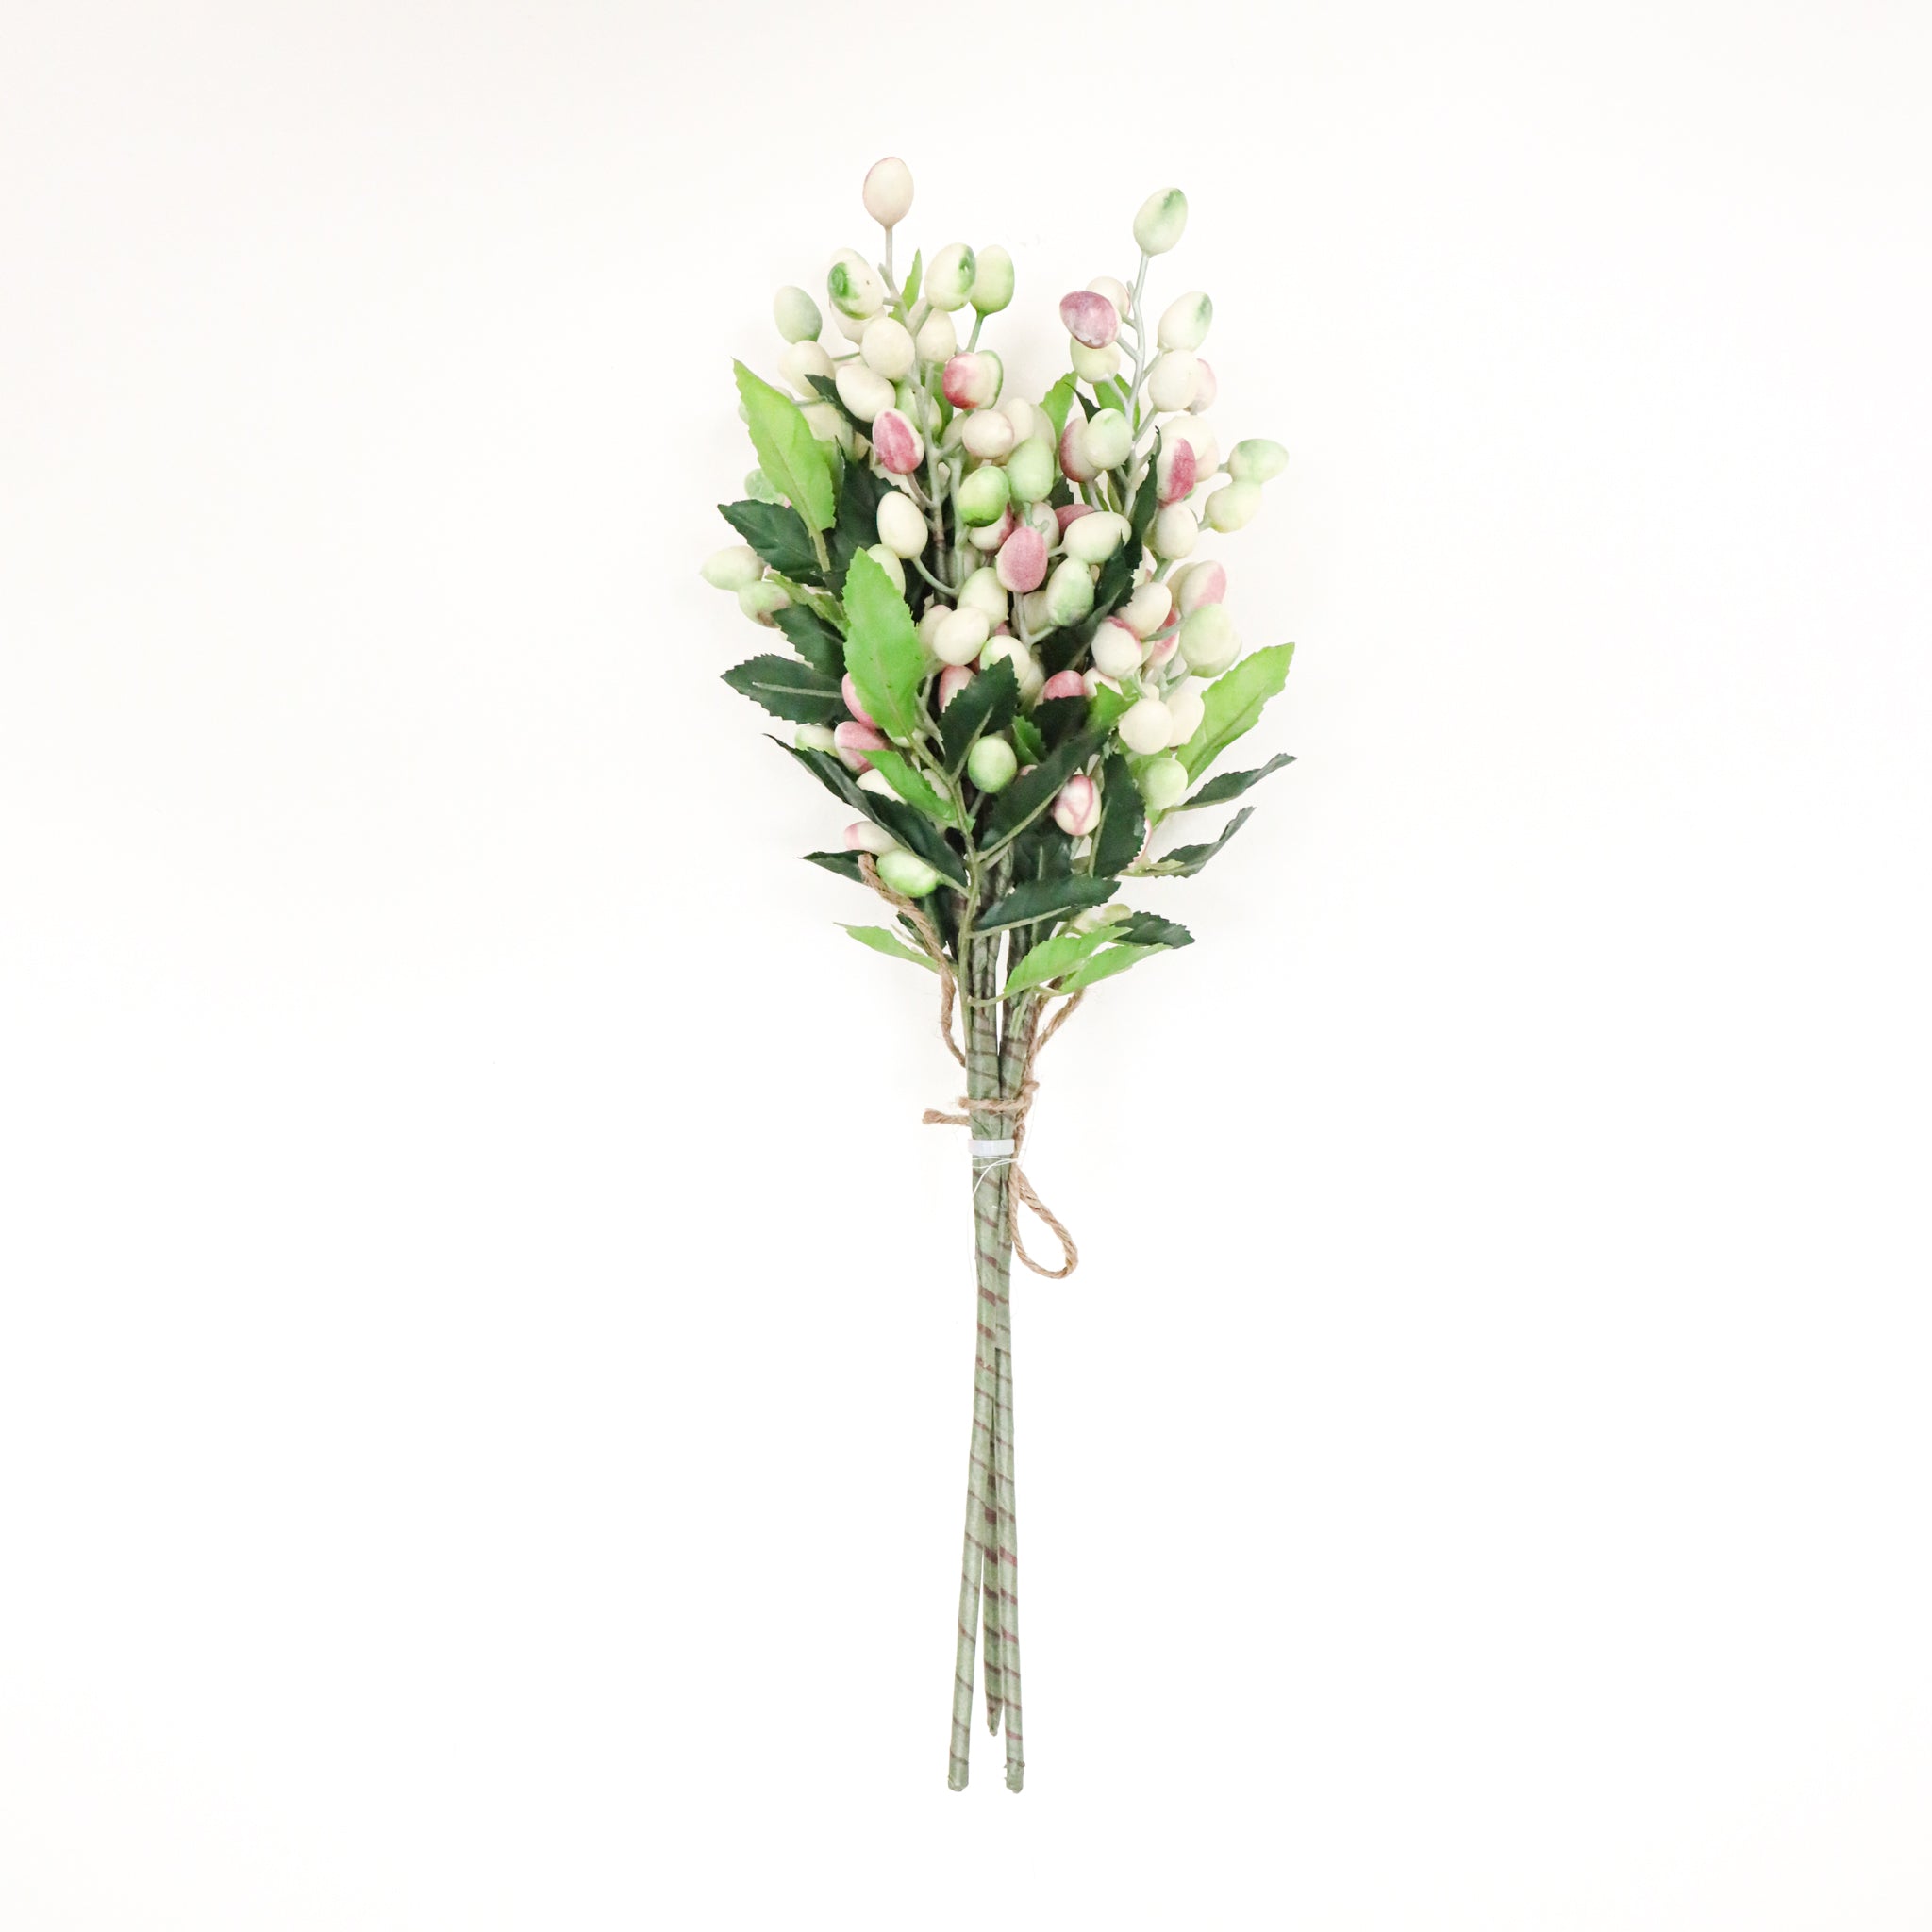 Palisade Artificial Berry Bouquet 15.5'' X 8'' (Set Of 3)